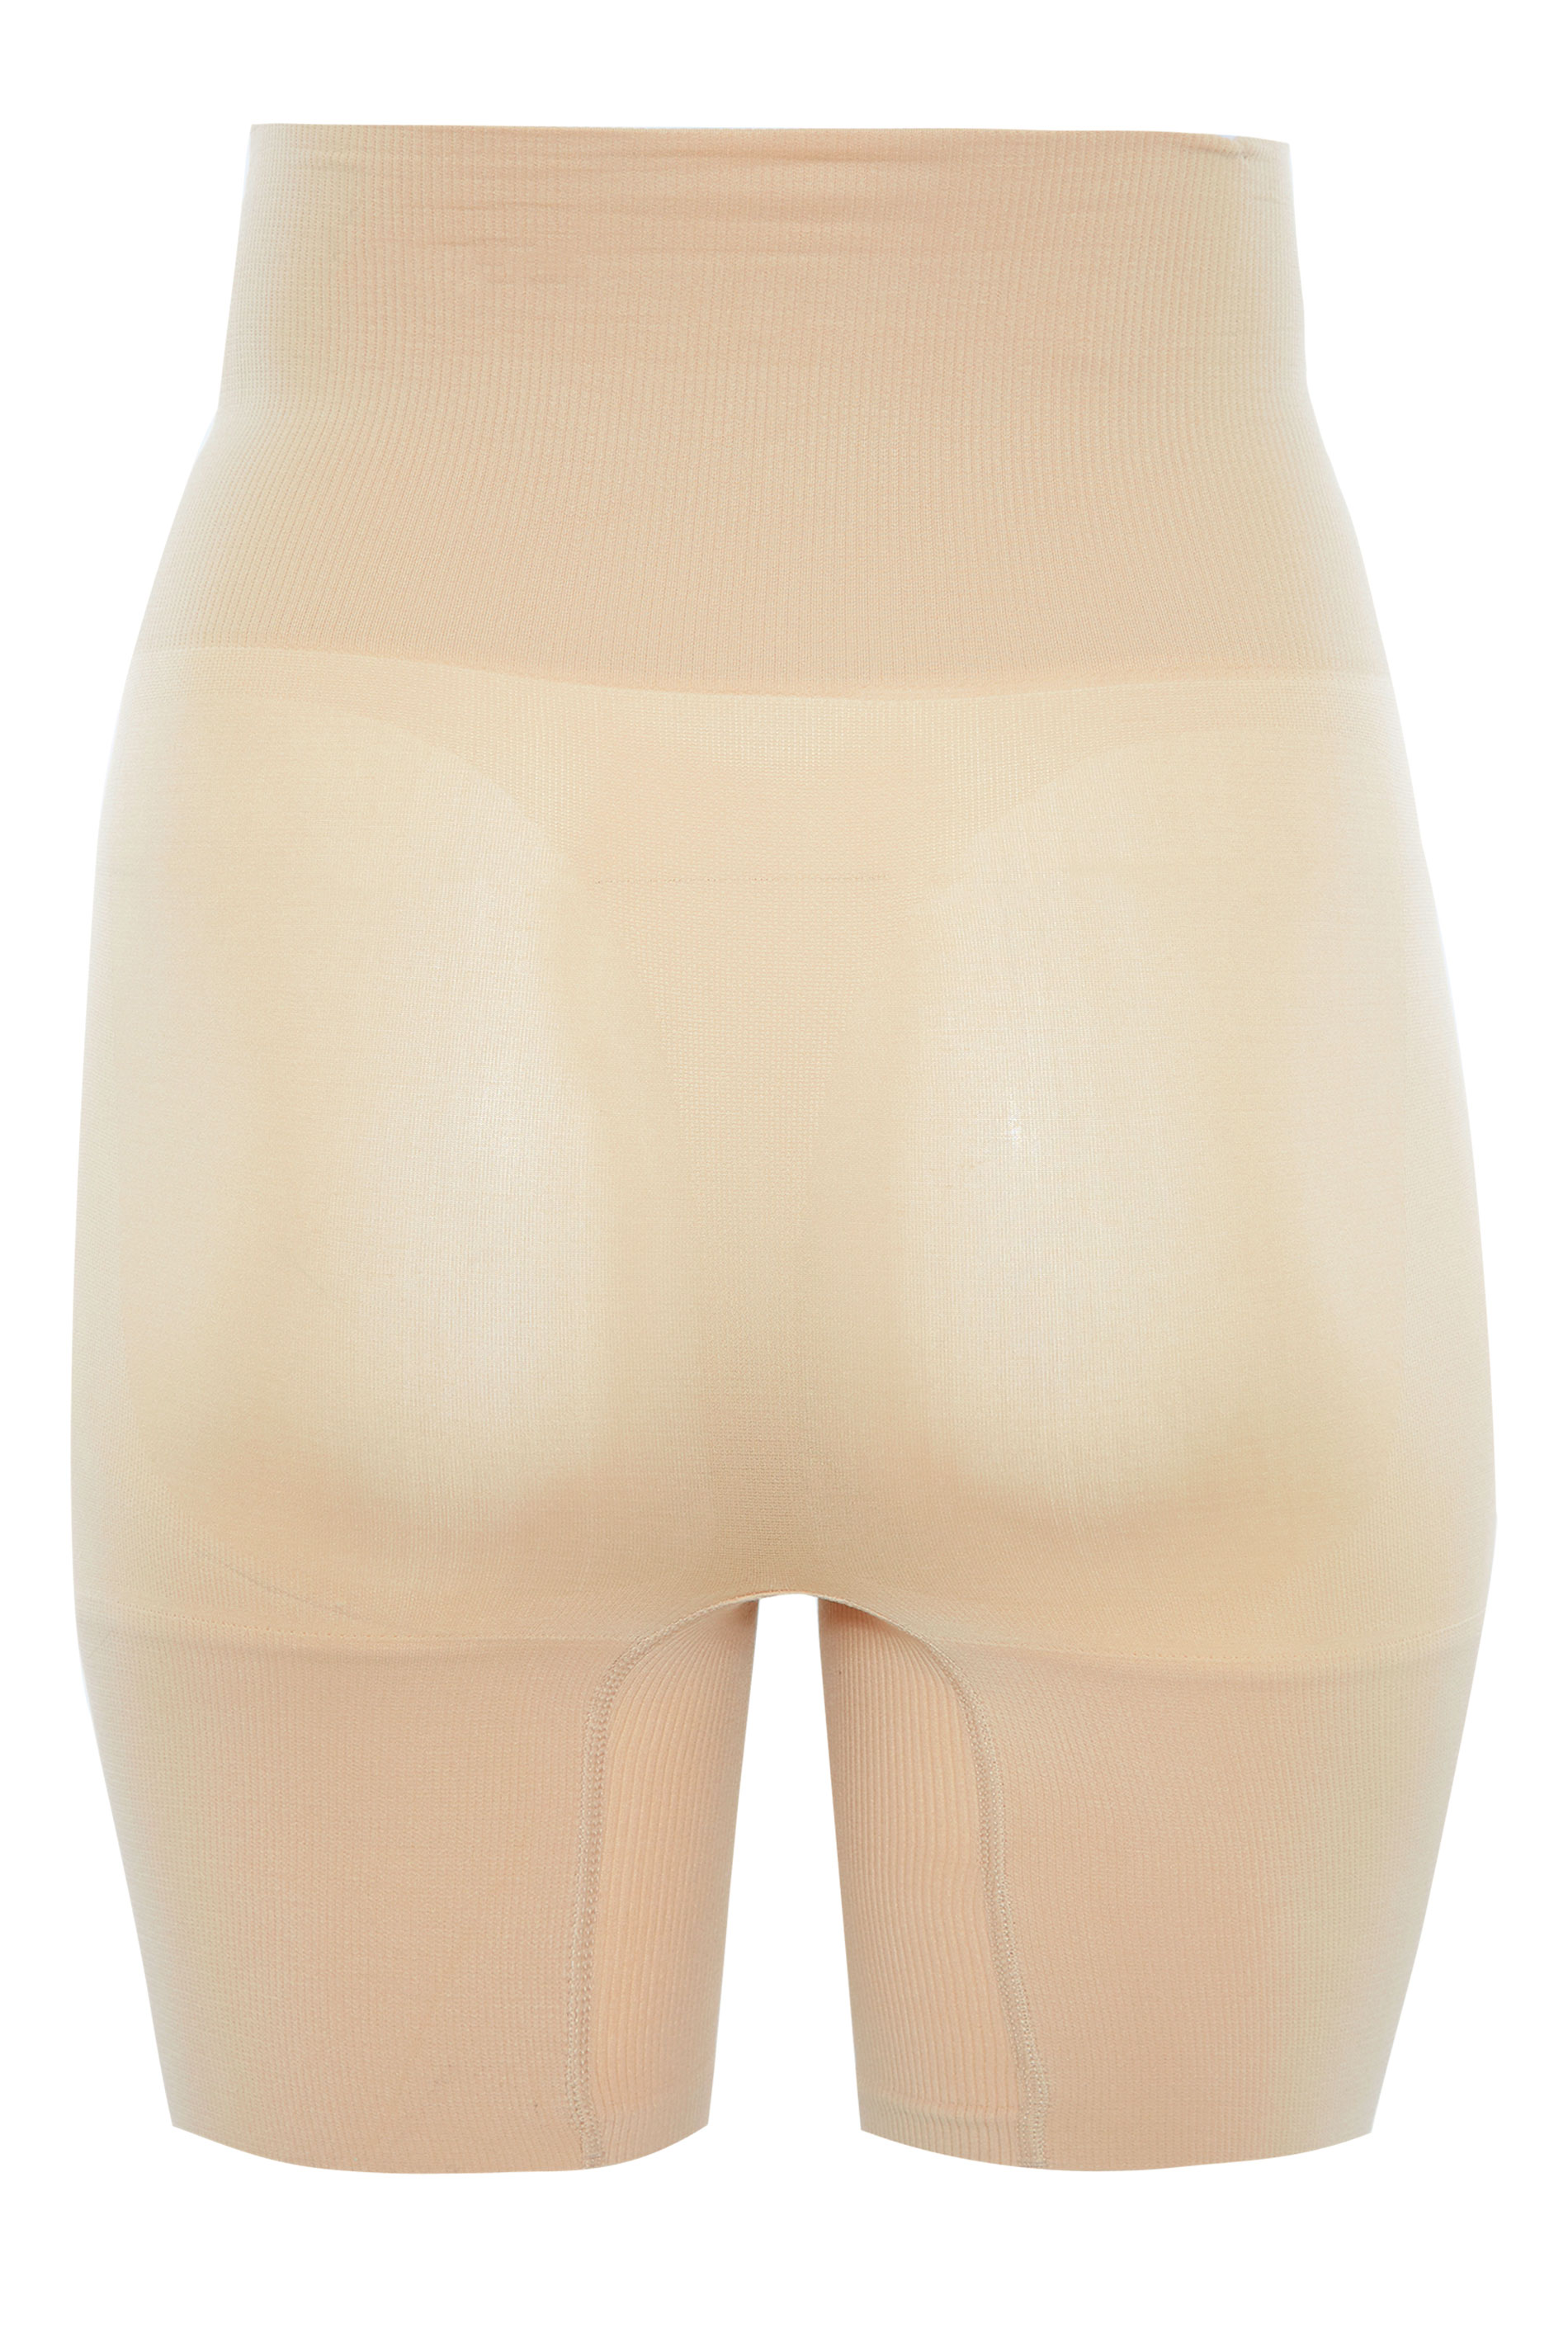 nude shapewear shorts  ATTLADY Tummy Control Shorts for Women High Waisted  Seamless Shapewear Shorts Plus Size Nude